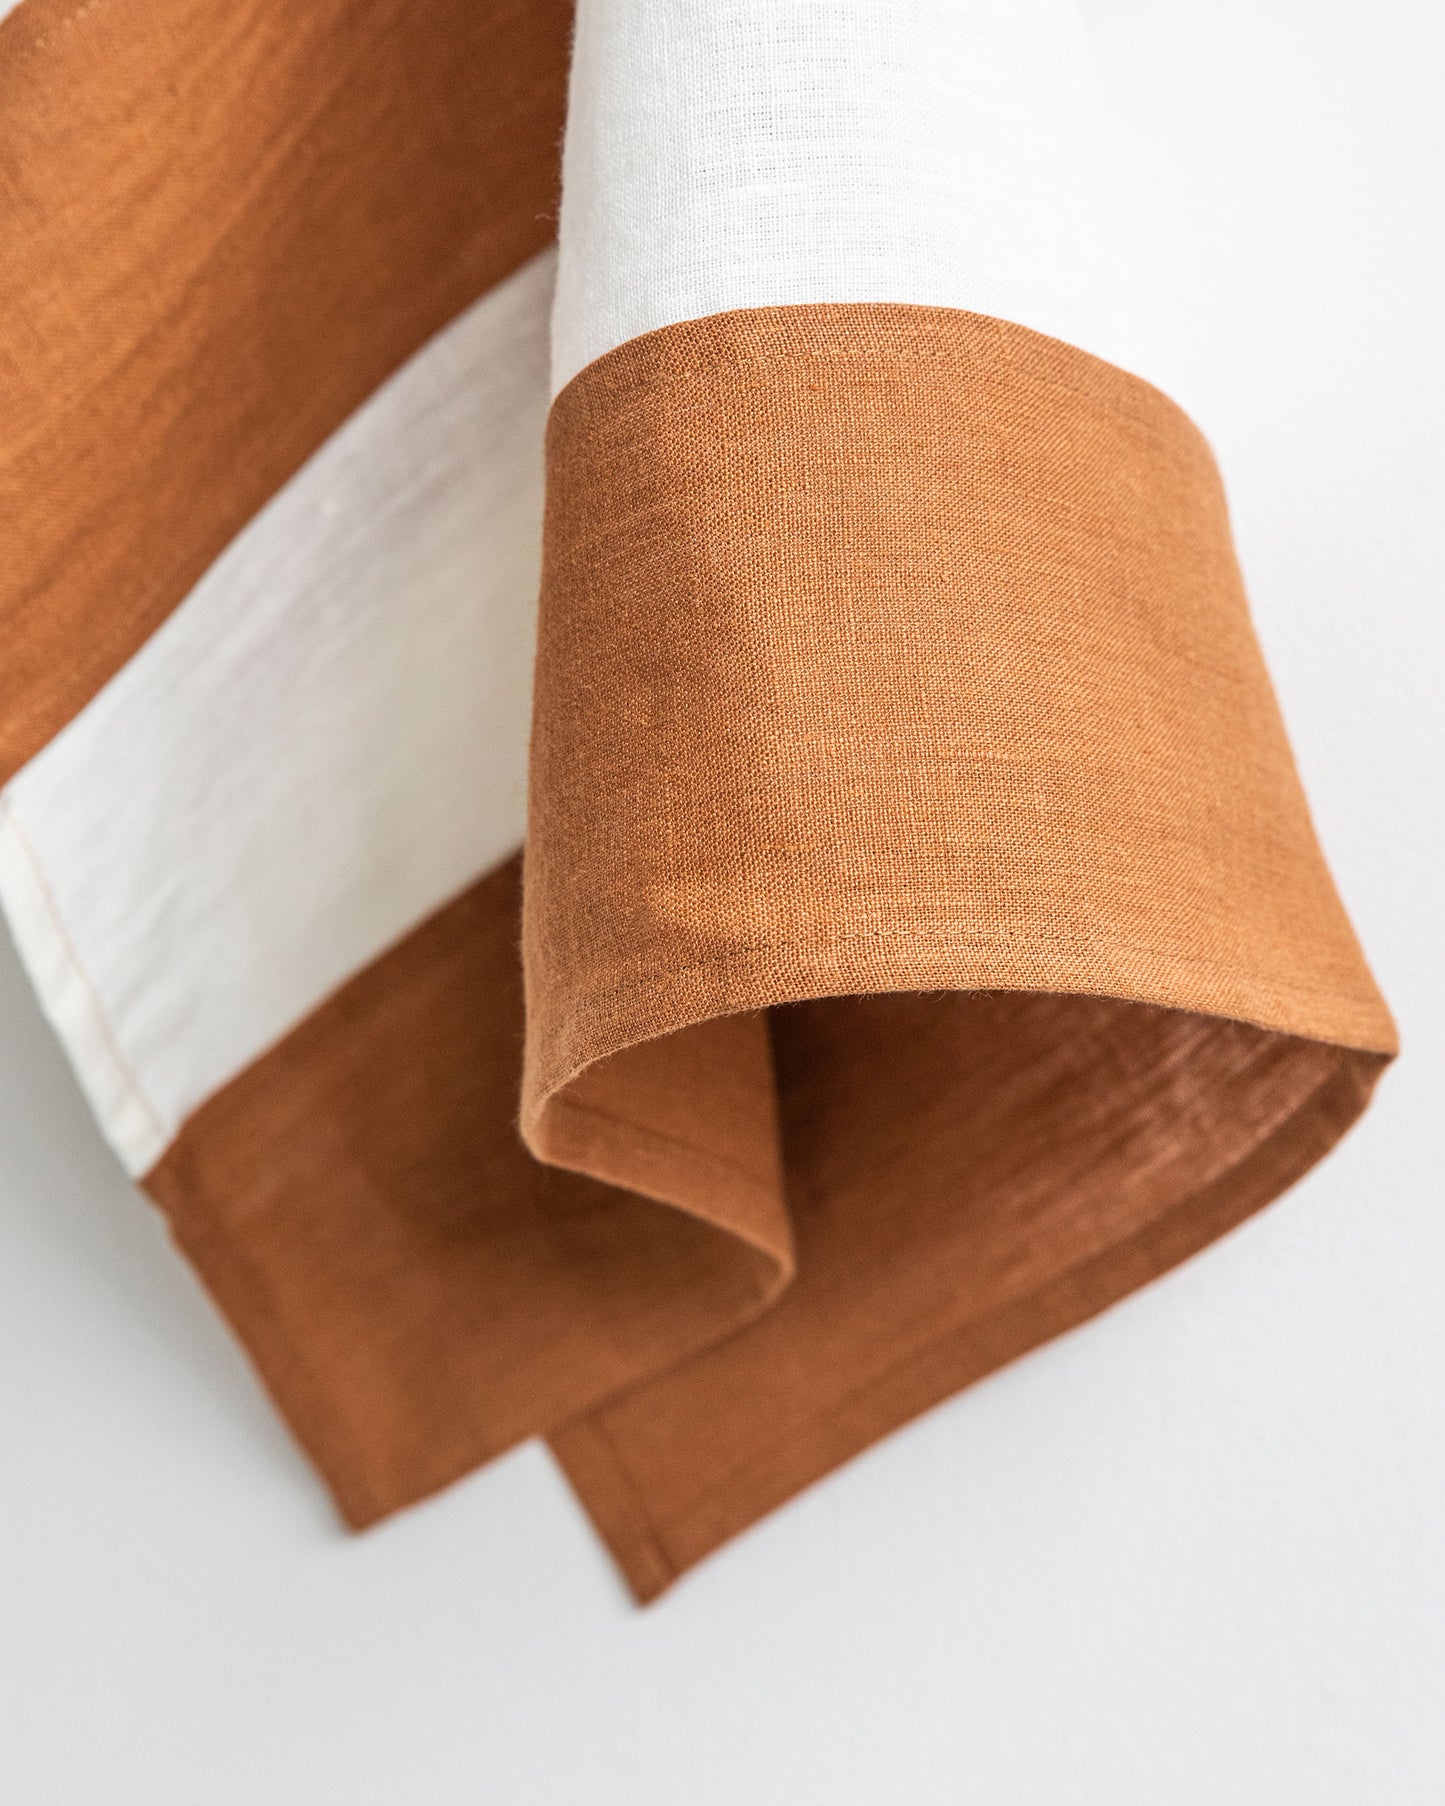 Zero-waste striped linen tea towel in Cinnamon - MagicLinen